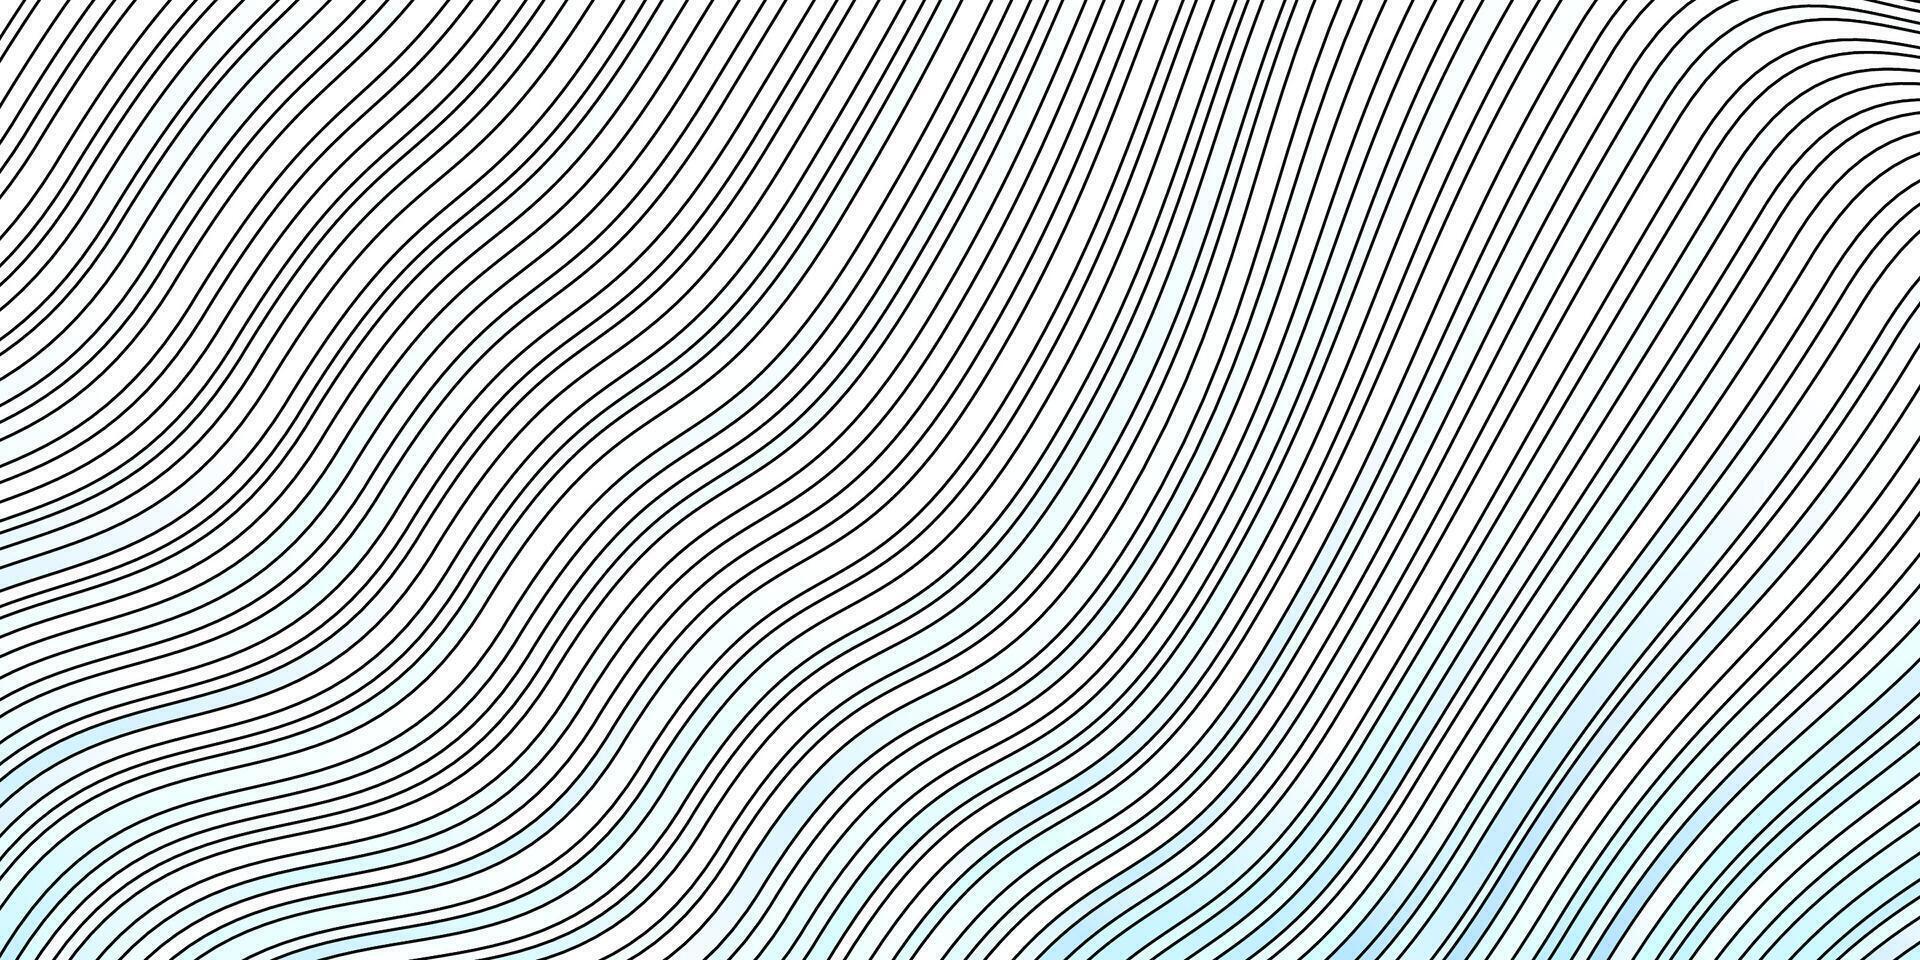 patrón azul claro con líneas curvas. vector